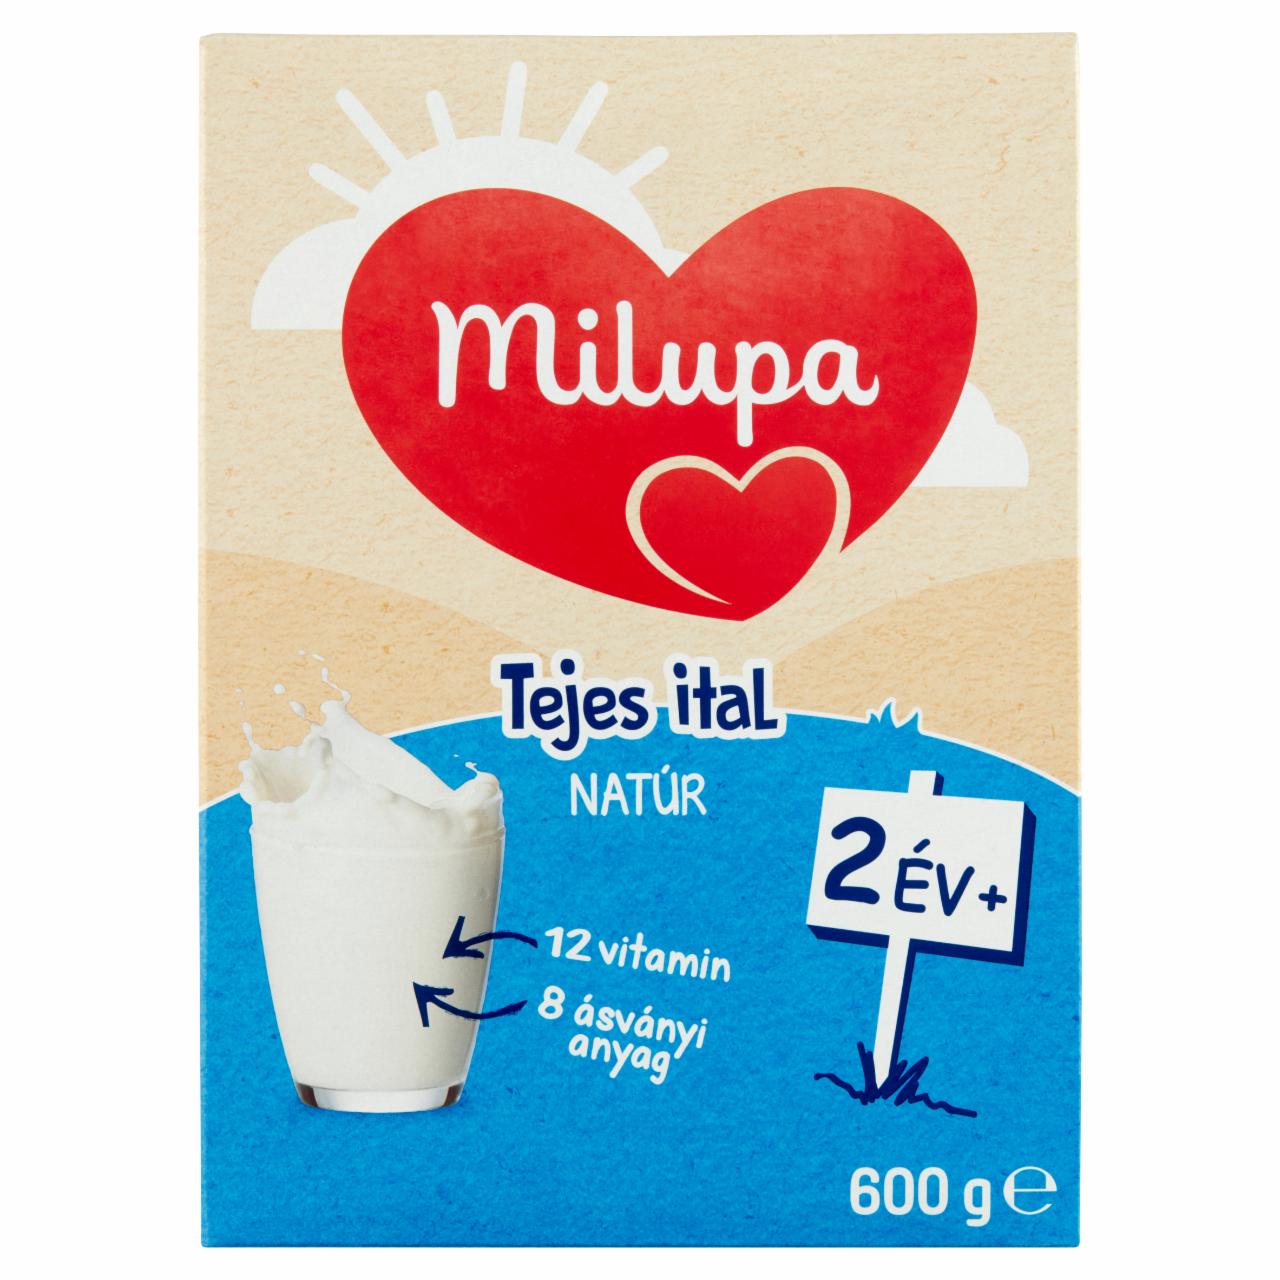 Képek - Milupa natúr tejes ital 24 hó+ 600 g